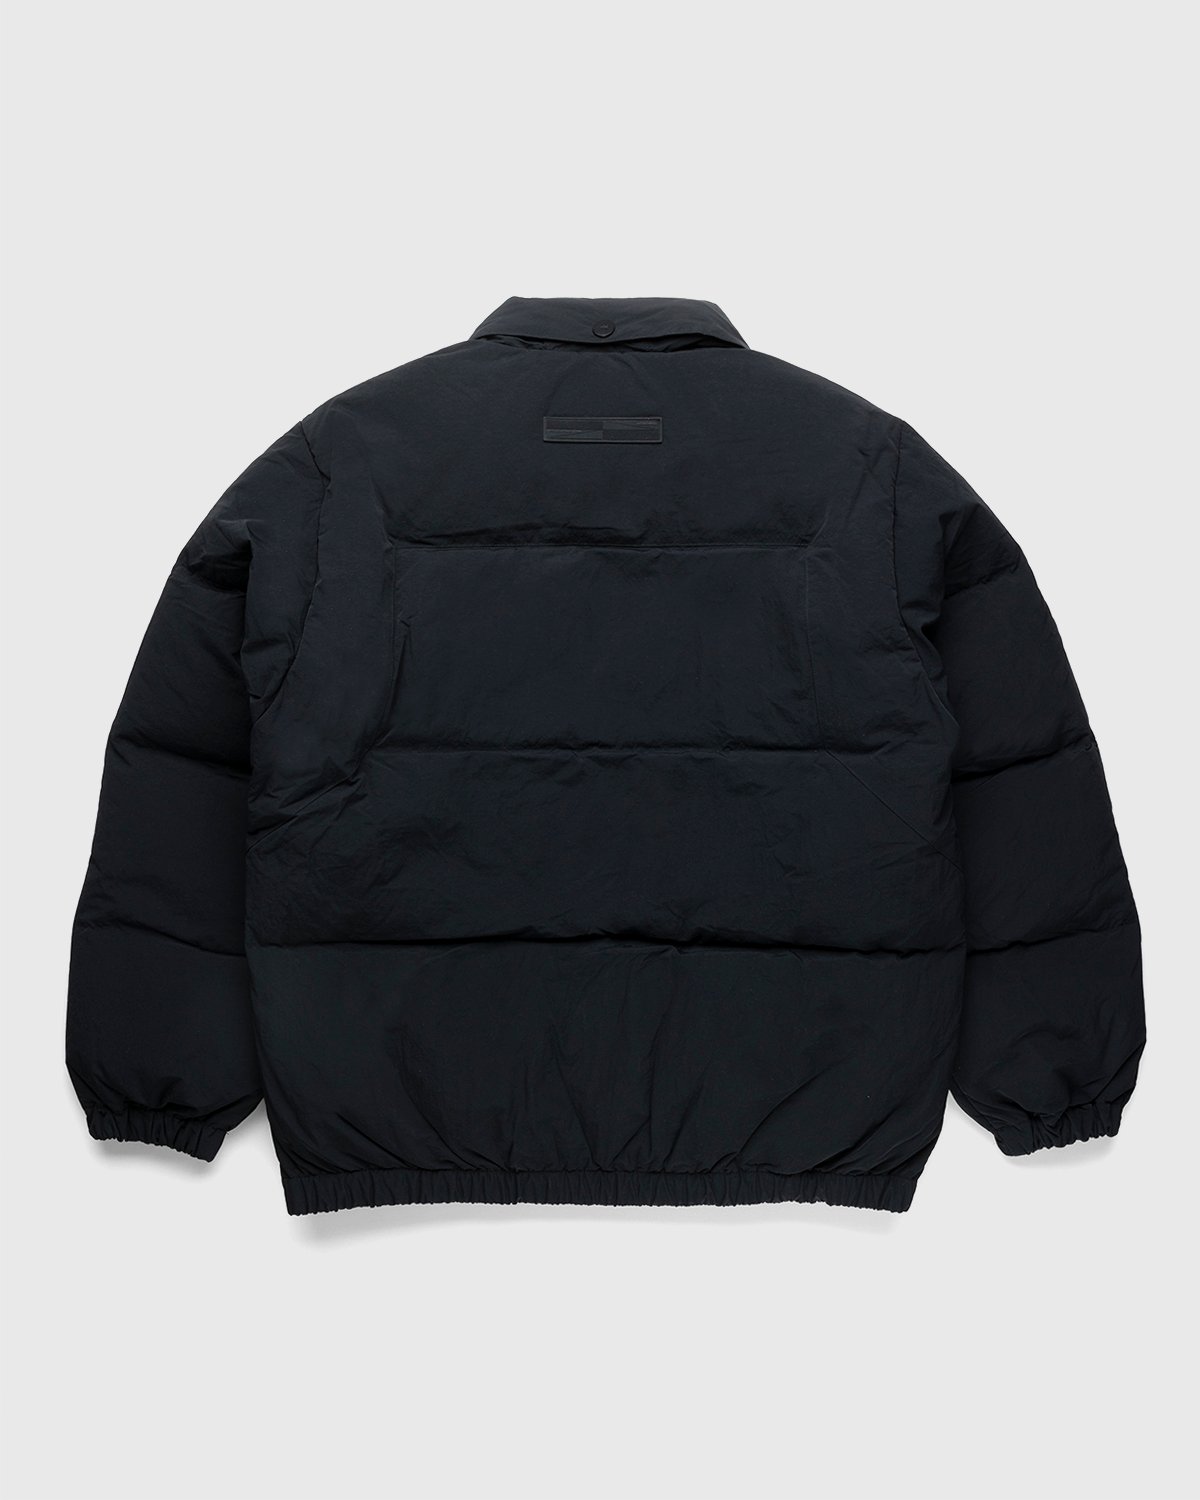 A-Cold-Wall* - Cirrus Jacket Black - Clothing - Black - Image 2